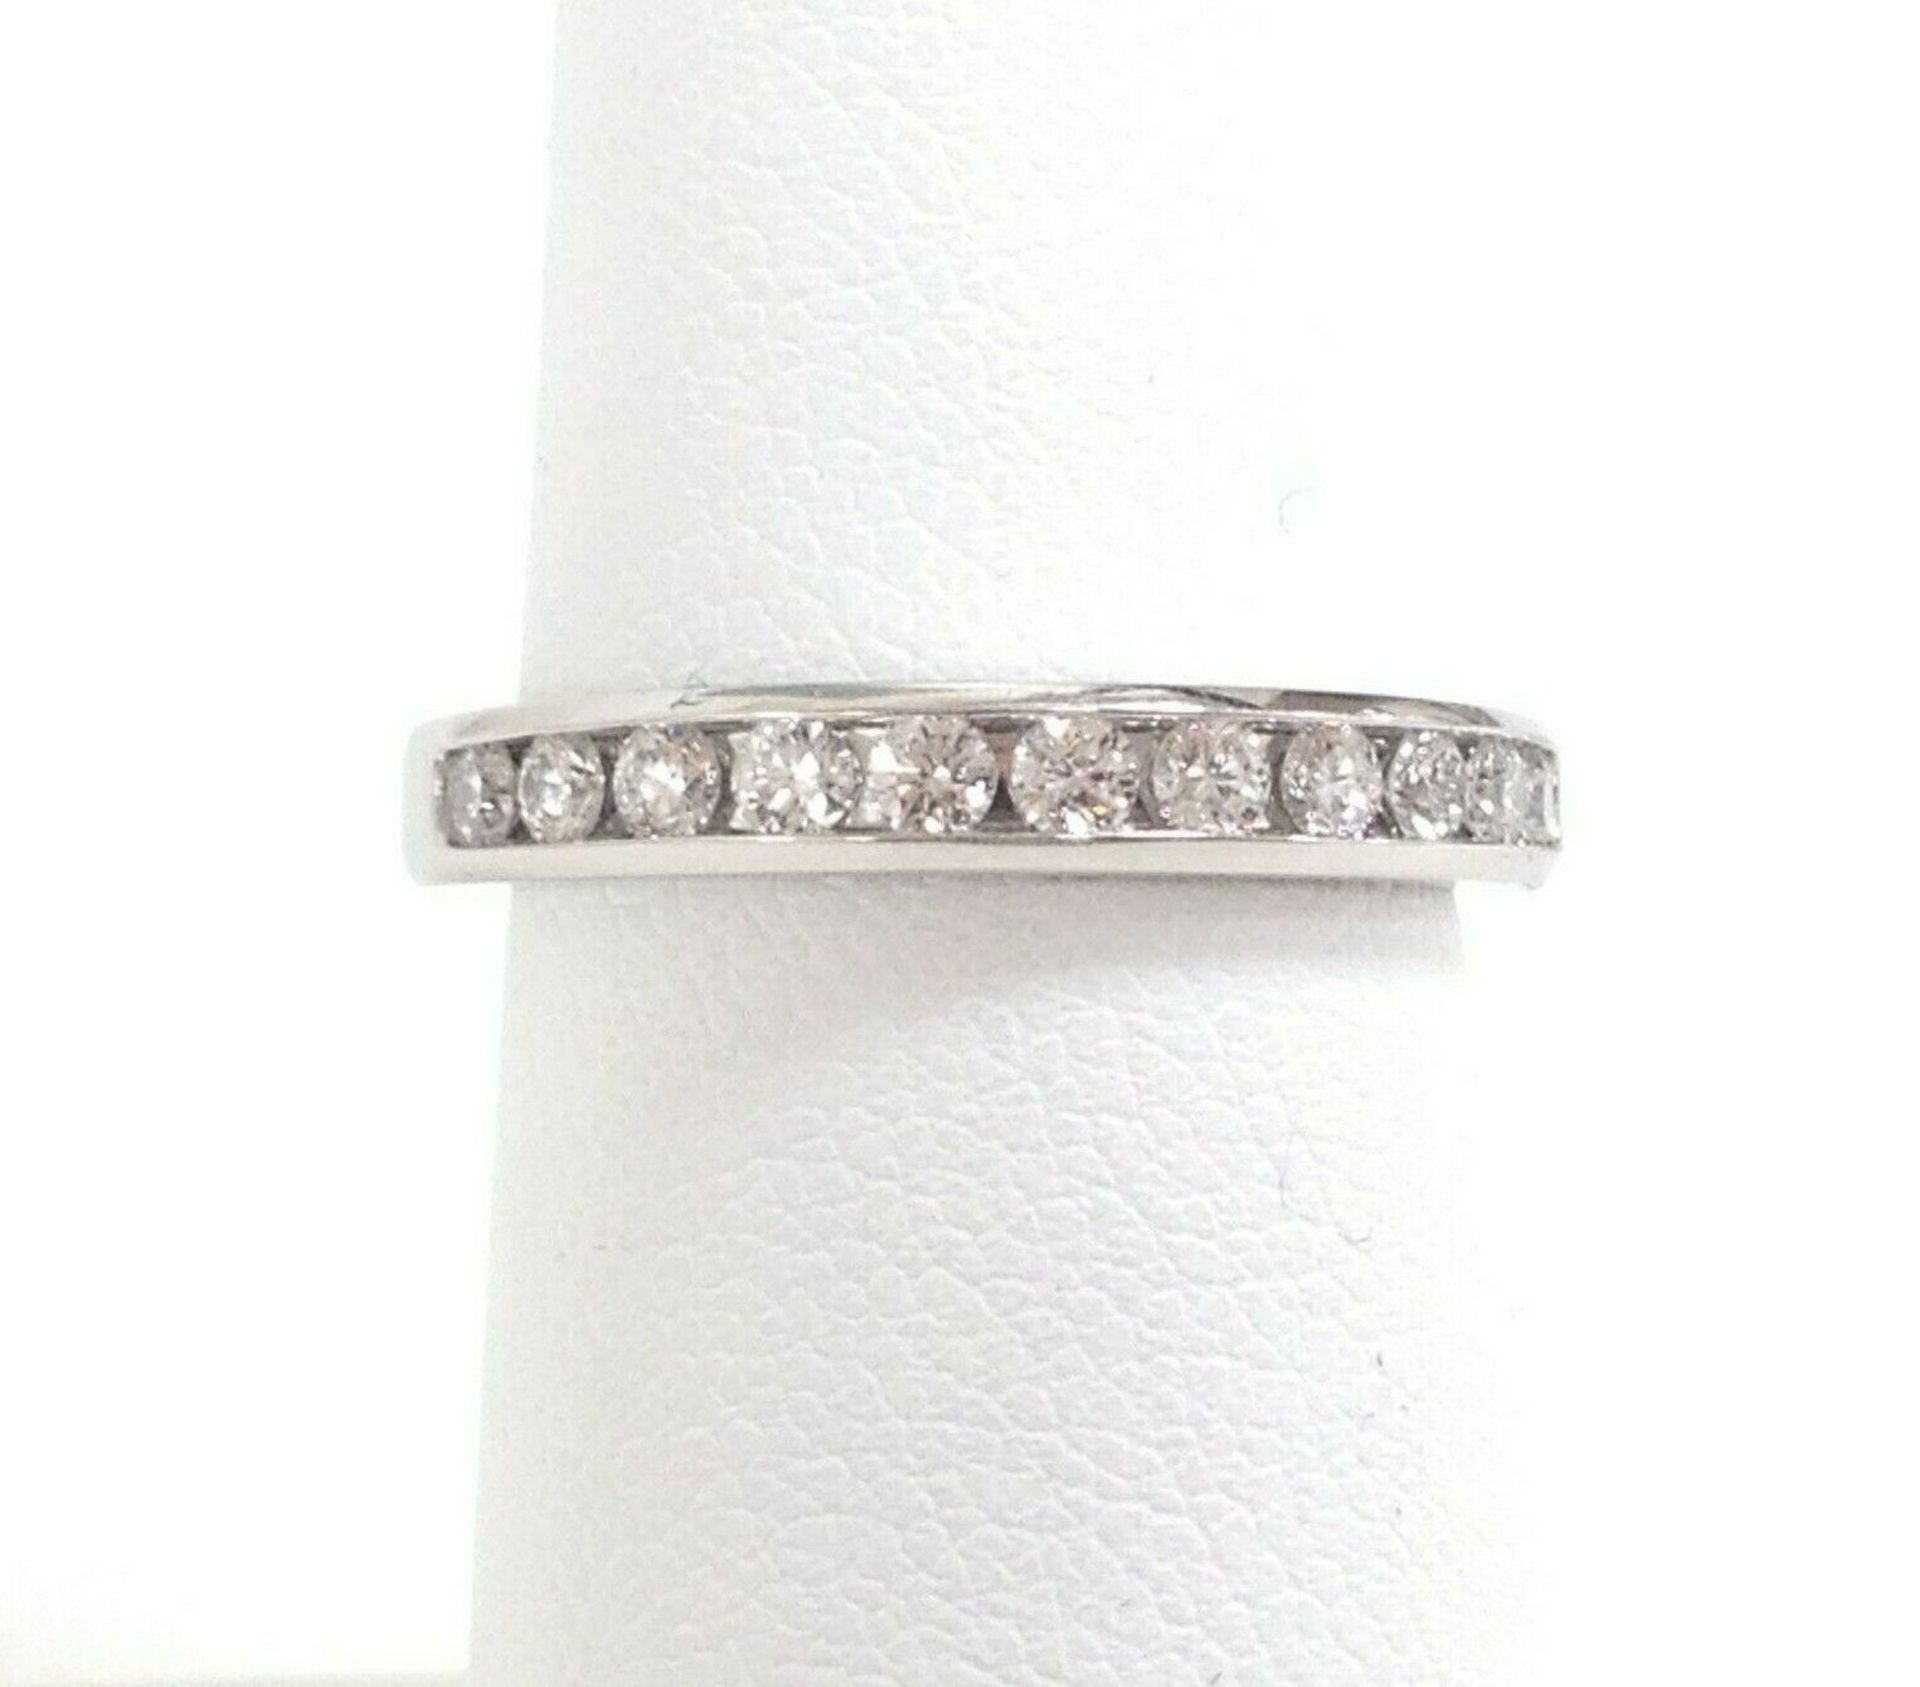 Tiffany & Co. 950 Platinum Half Eternity 0.33 CTW Diamond Wedding Ring Band Size 5.75 #R1127 - Image 3 of 6